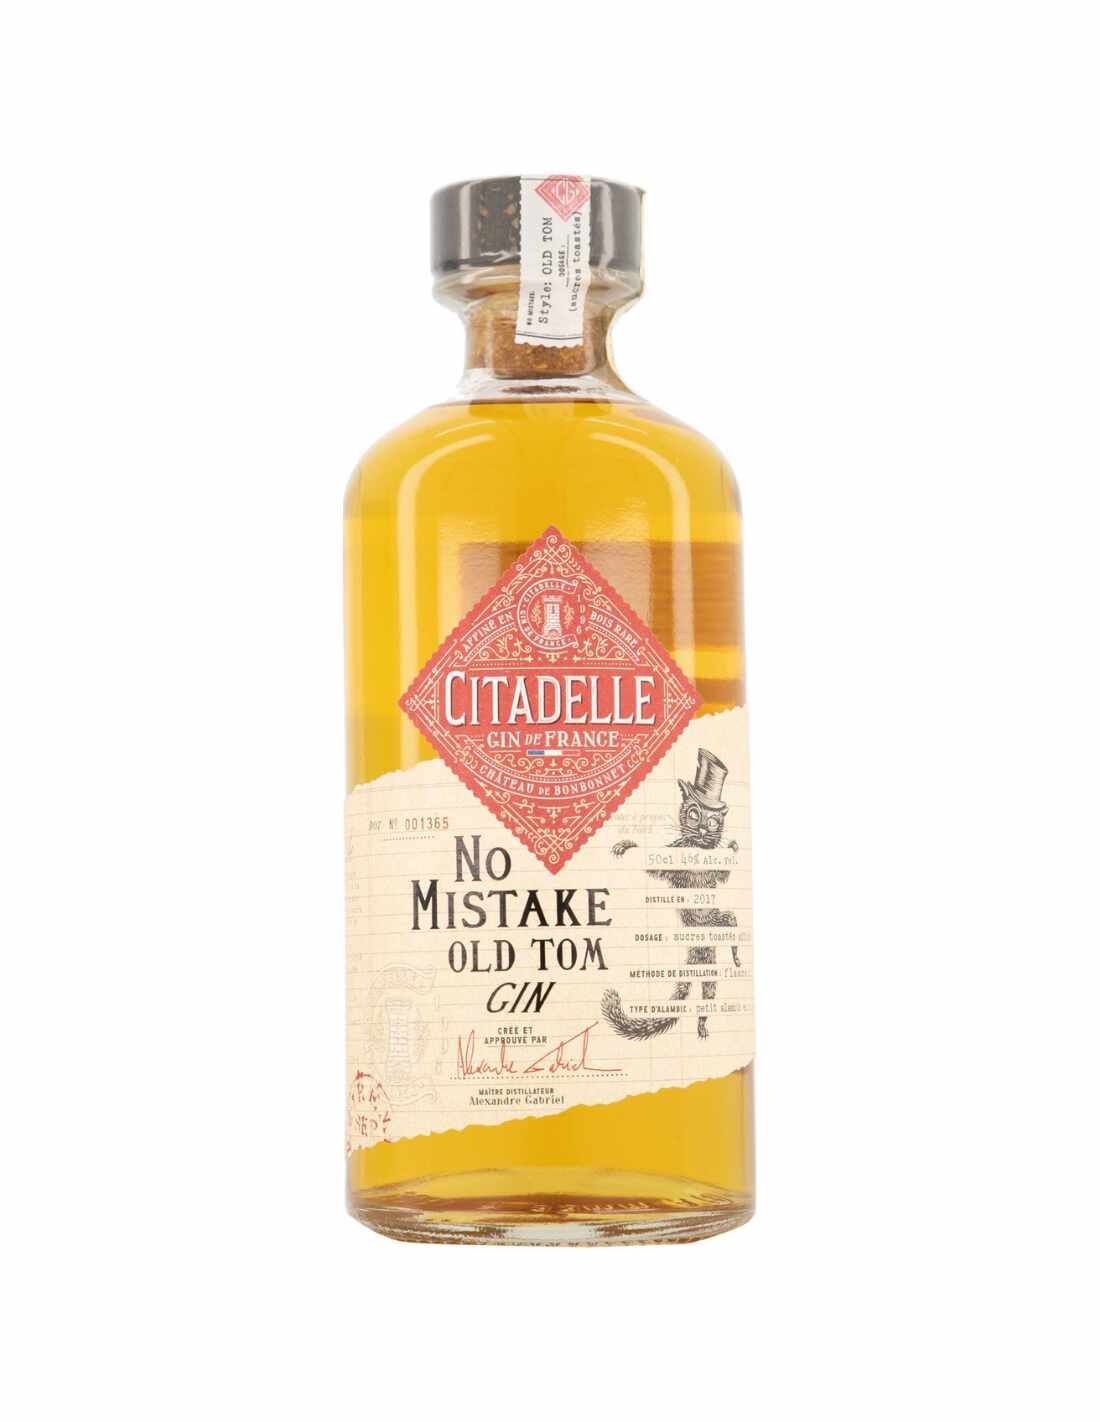 Gin Citadelle No Mistake Old Tom, 46% alc., 0.5L, Franta